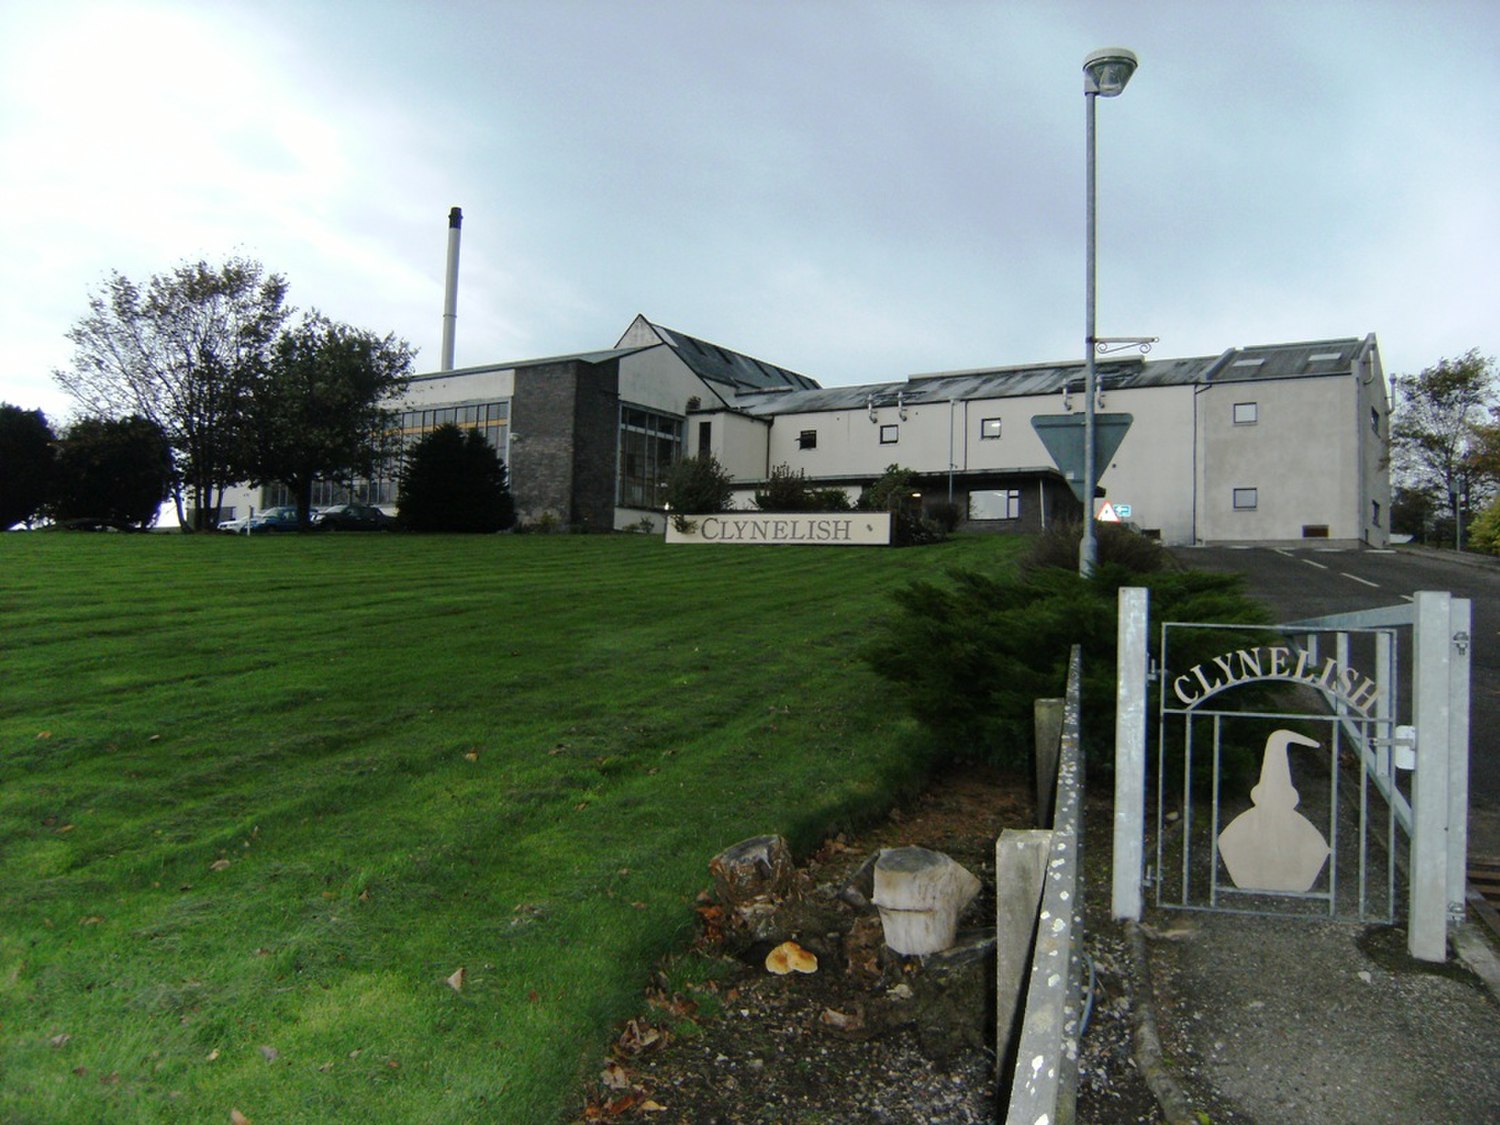 Caol Ila distillery - Wikipedia